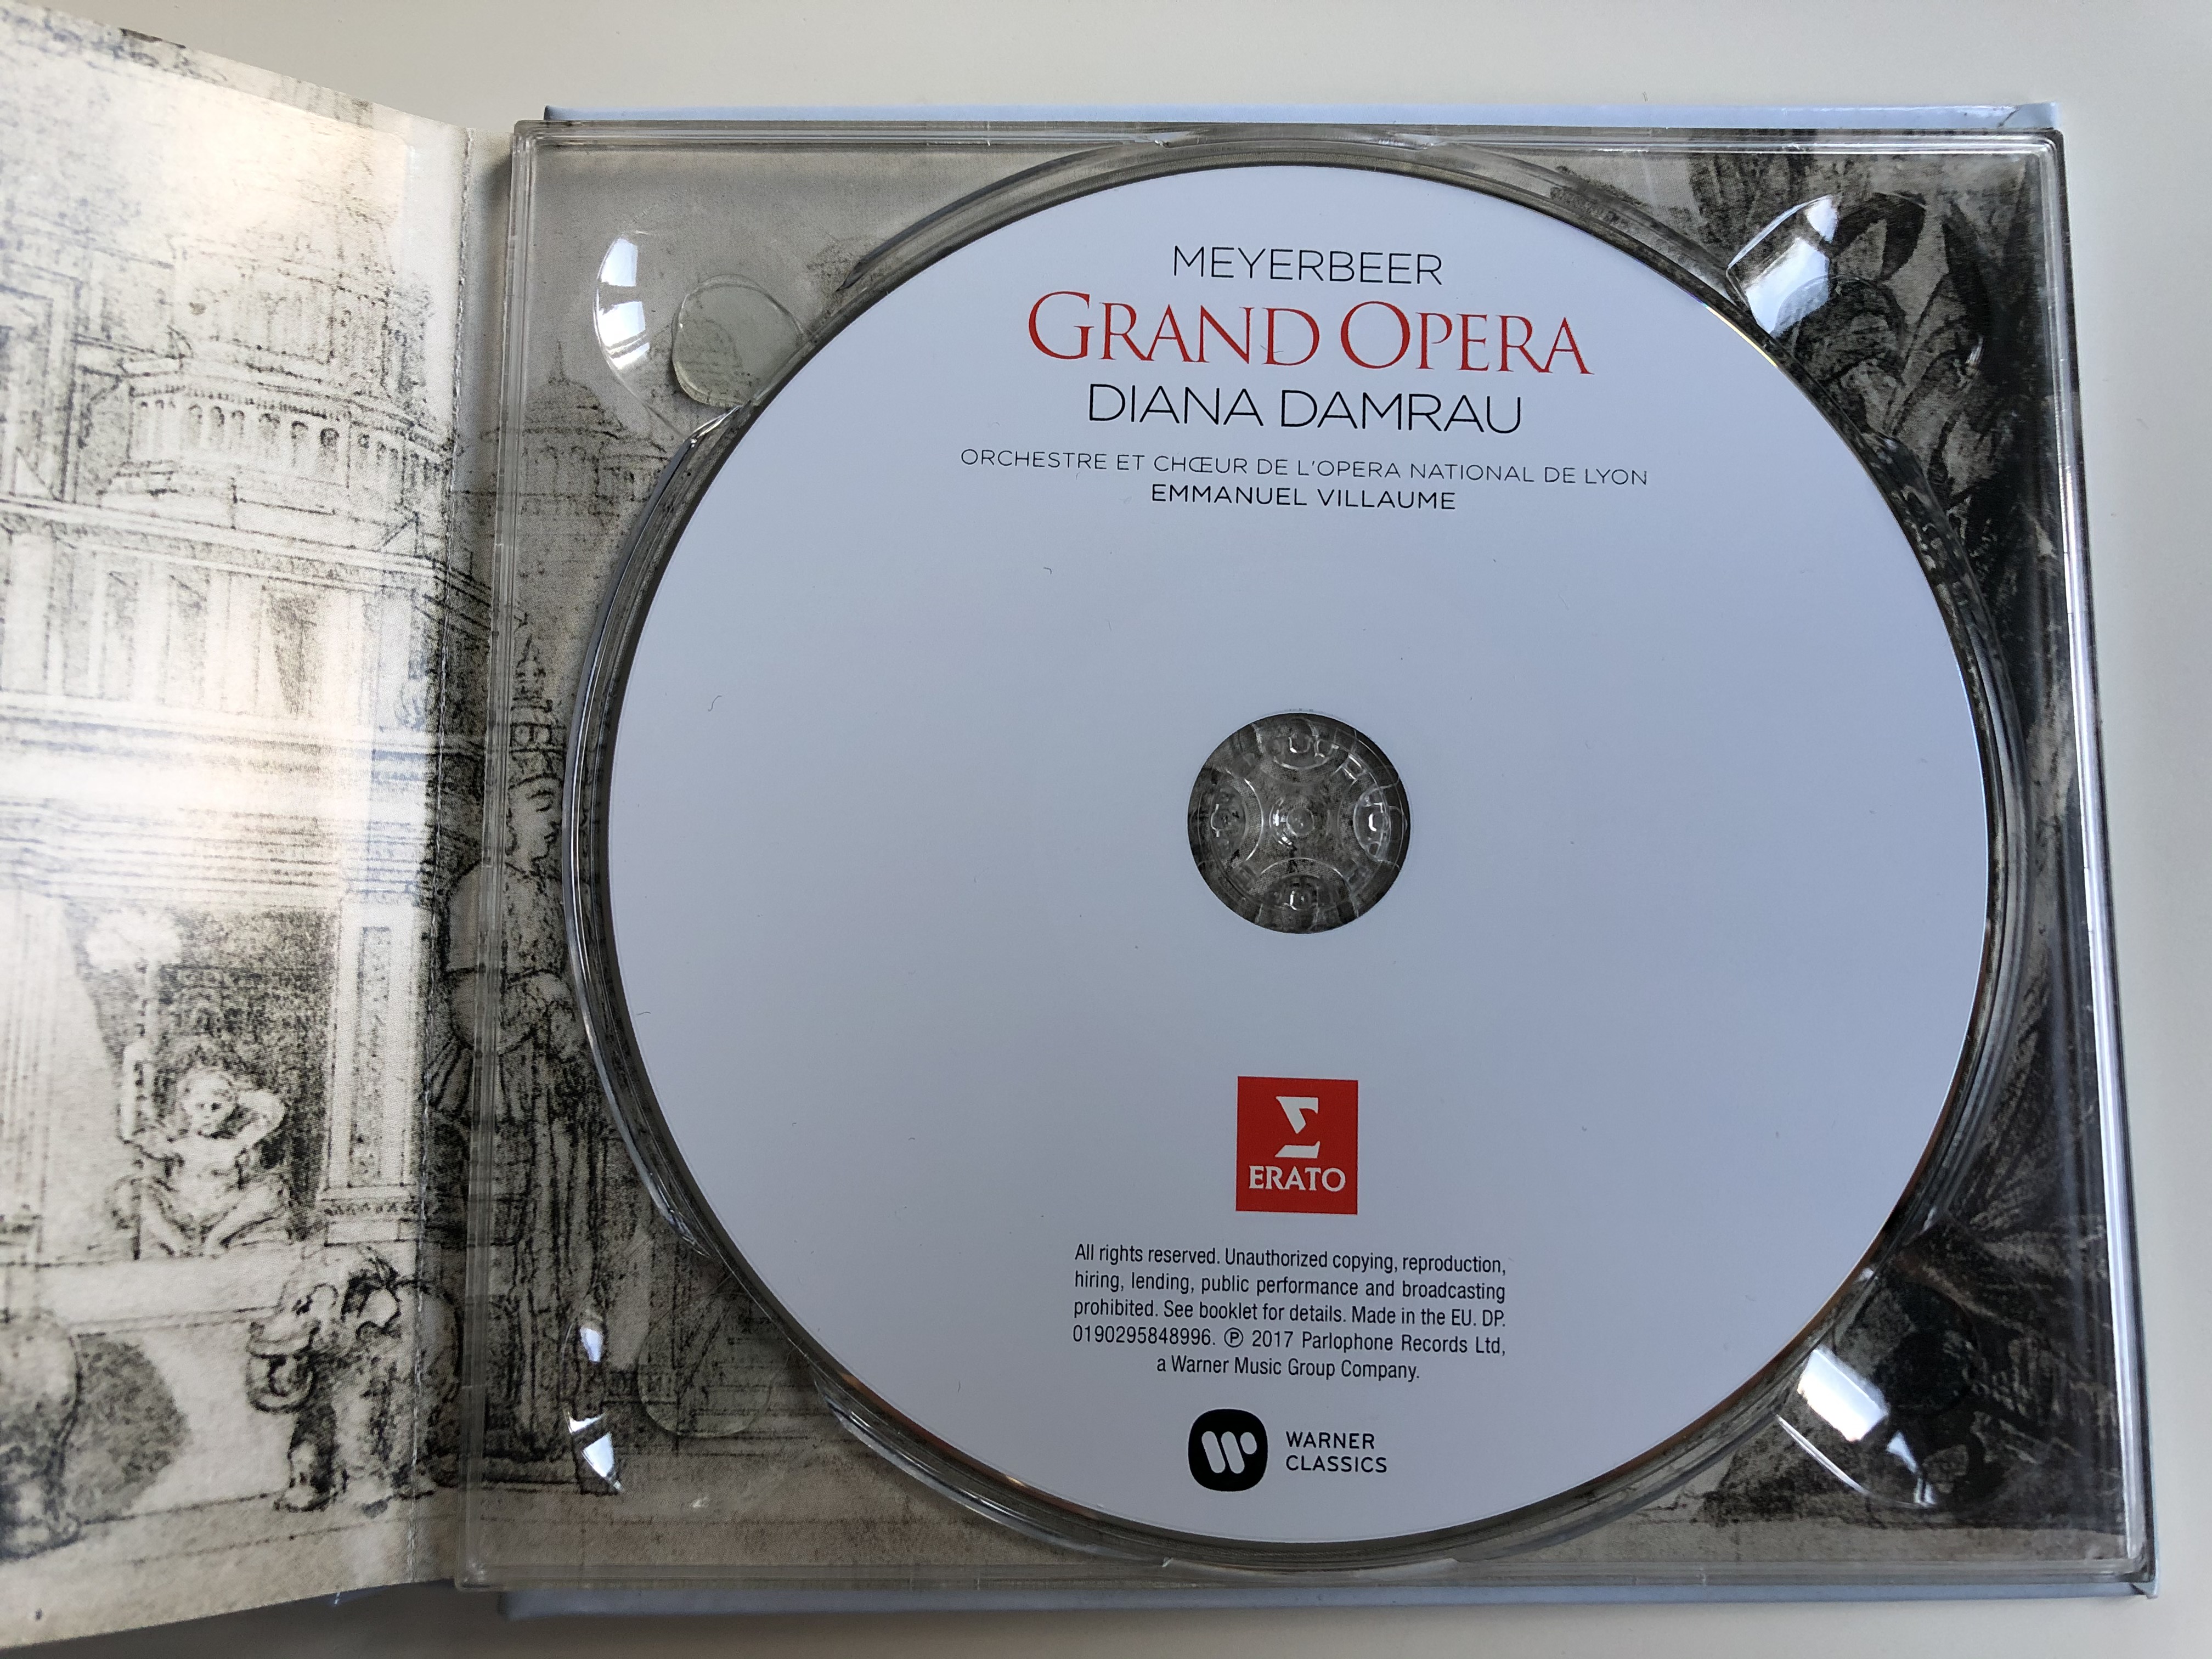 meyerbeer-grand-opera-diana-damrau-orchestre-et-ch-ur-de-l-op-ra-national-de-lyon-emmanuel-villaume-erato-audio-cd-2017-0190295848996-9-.jpg